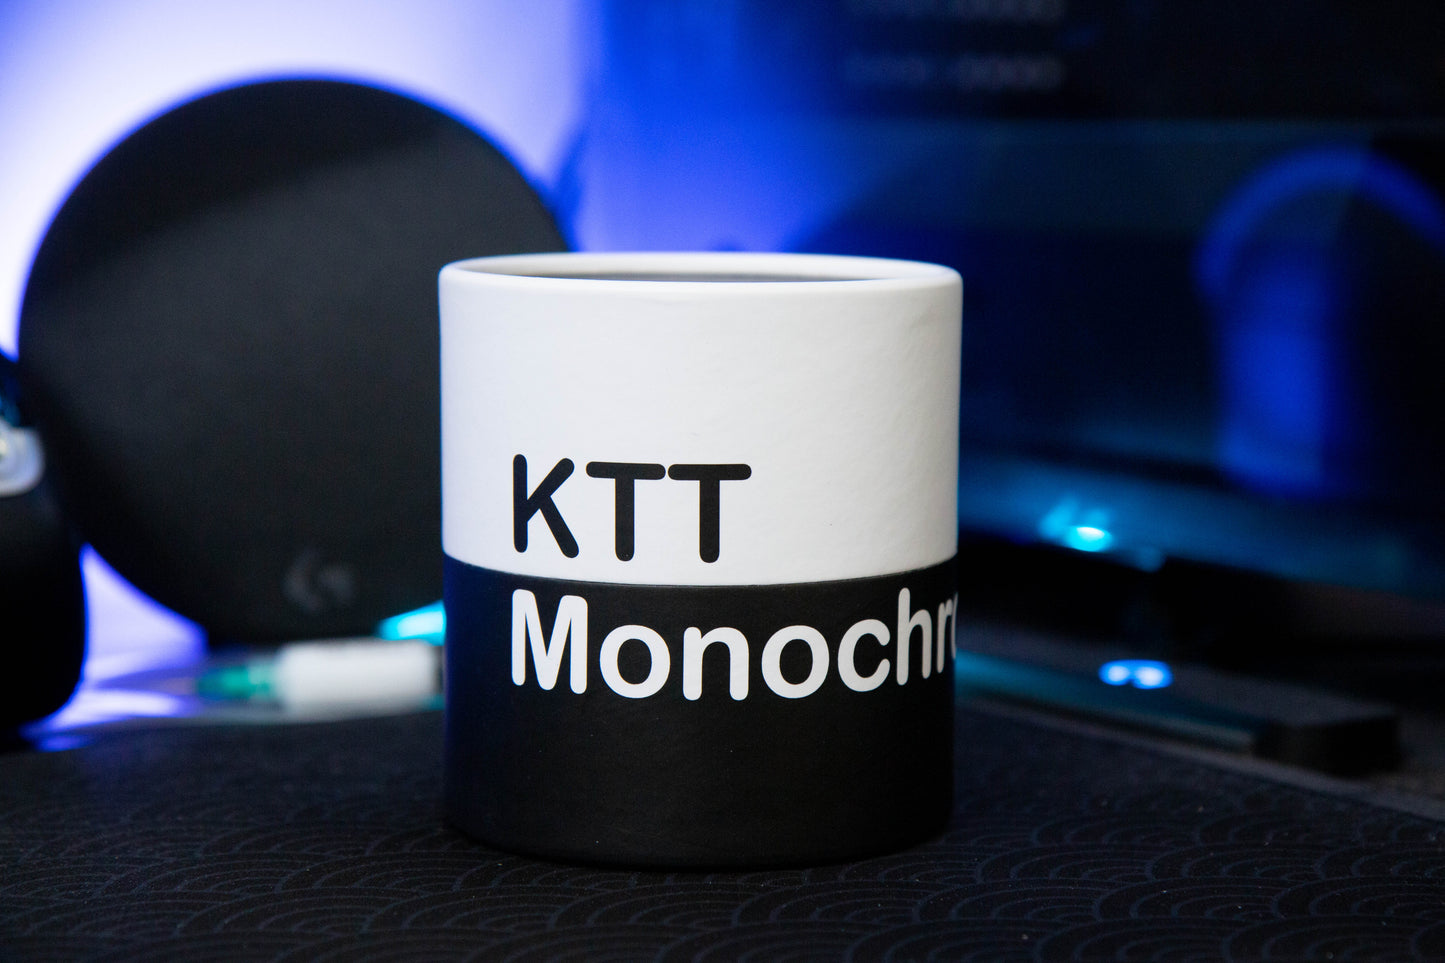 KTT Monochrome - Marble